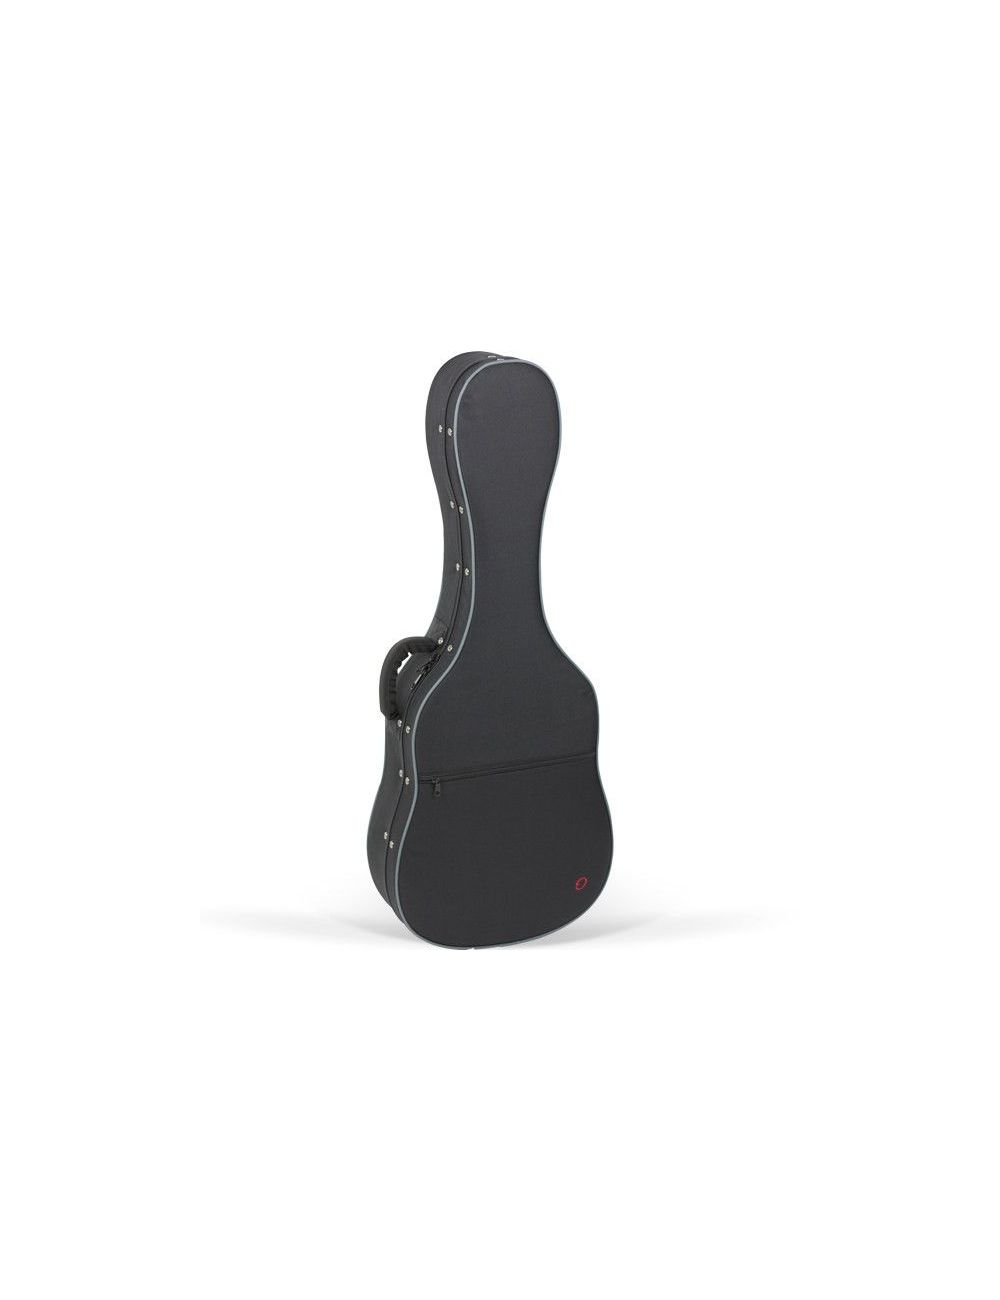 Ortola RB515 estuche para guitarras cadete 3/3